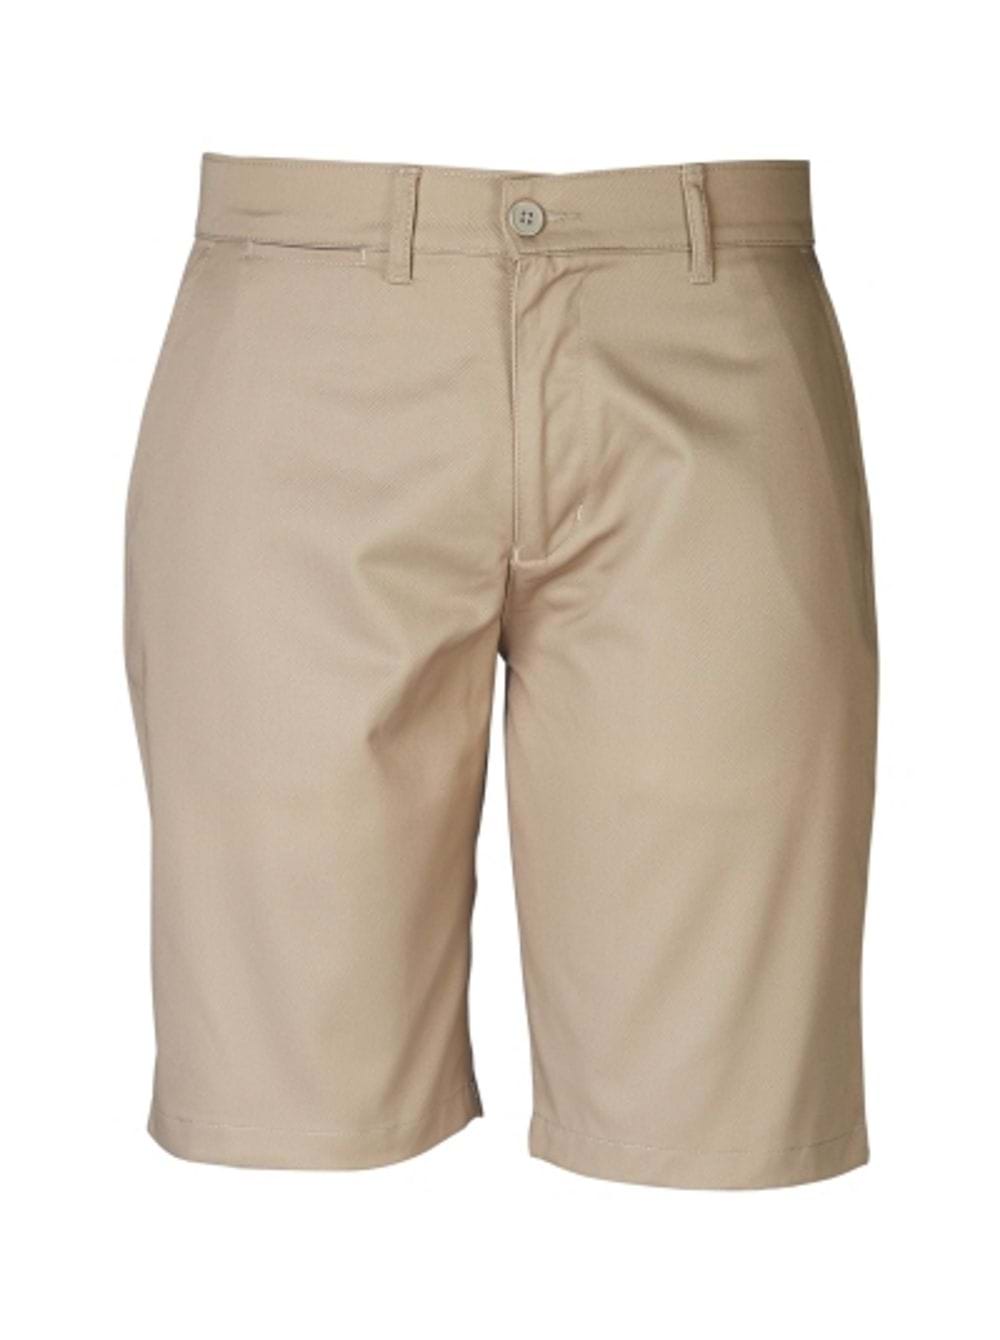 Westwood Bermuda Chino Shorts - Khaki Green / 32